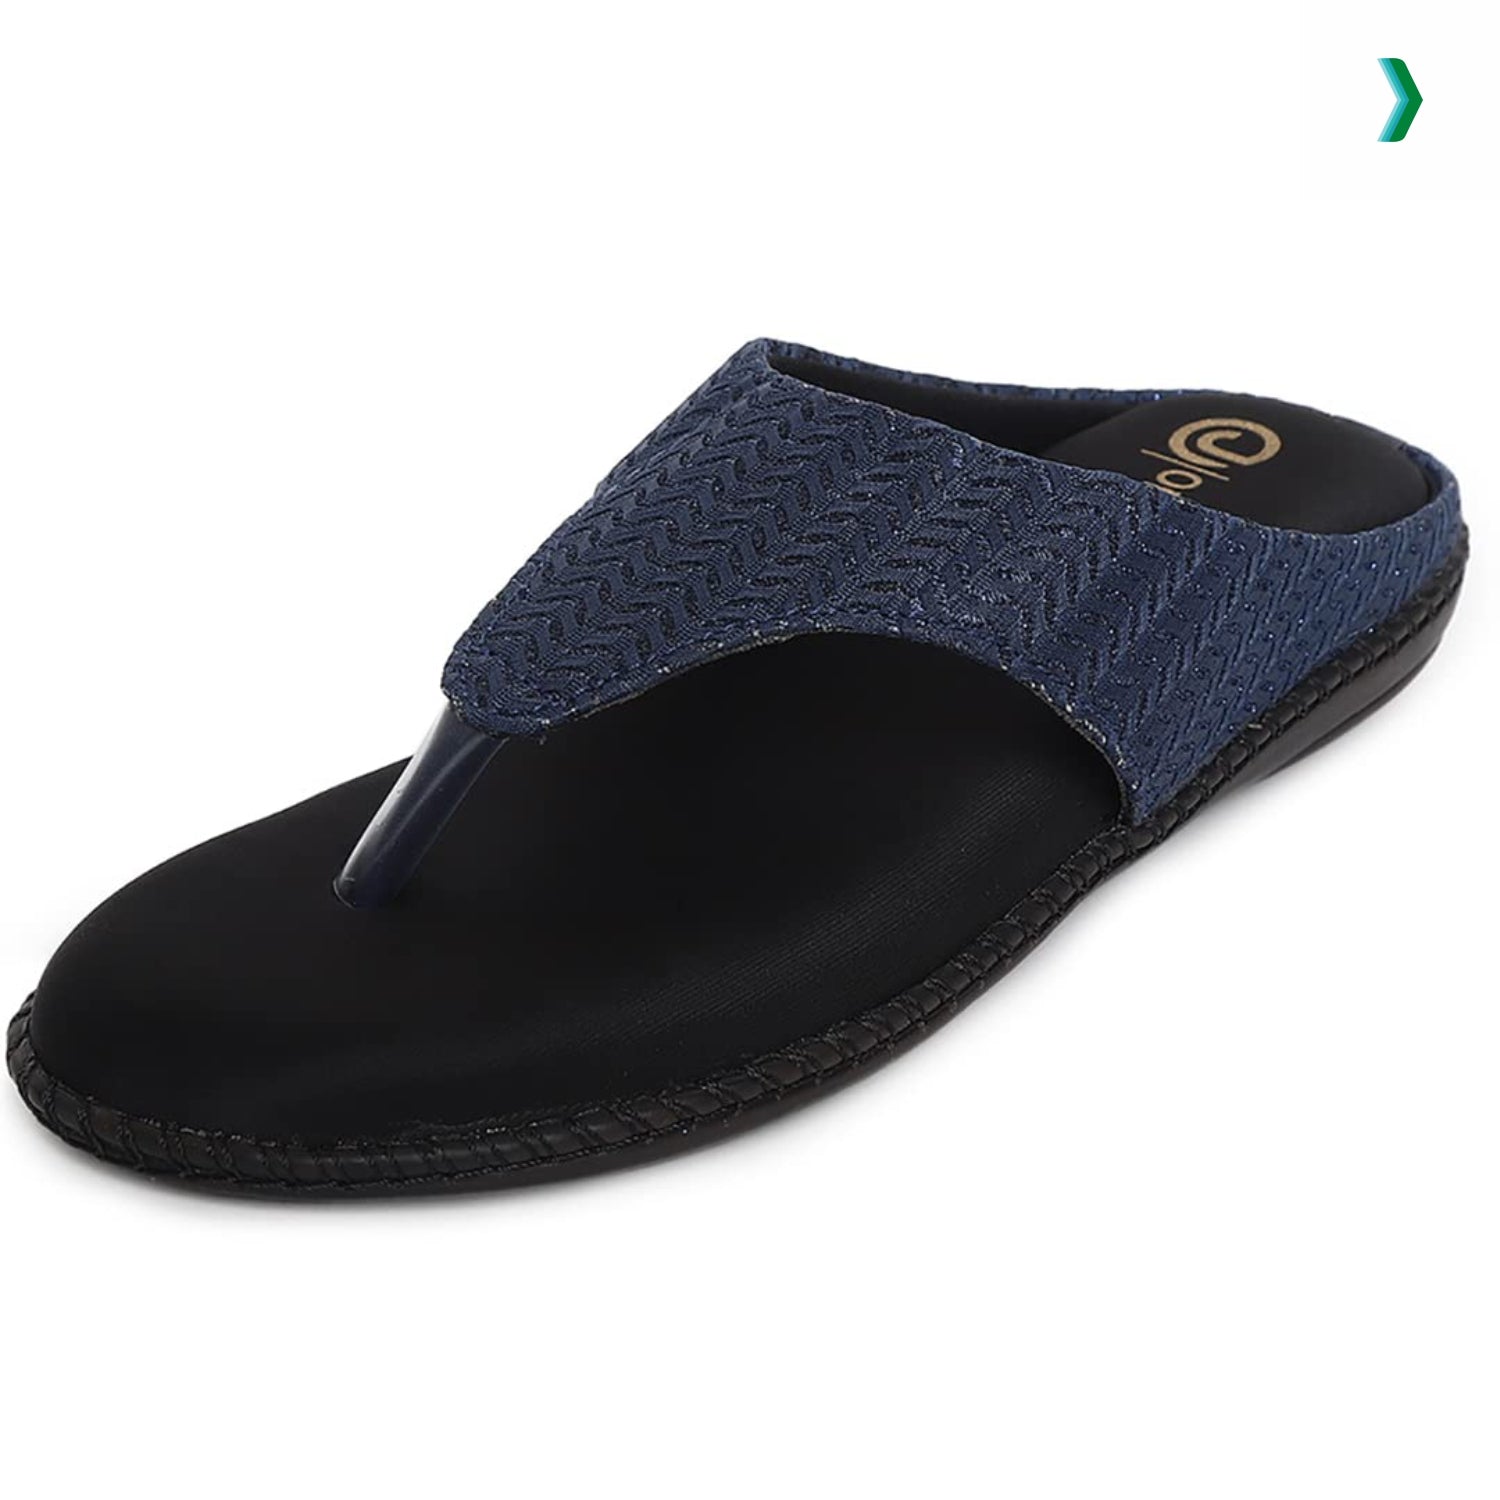 orthopedic slippers for women, ortho chappal